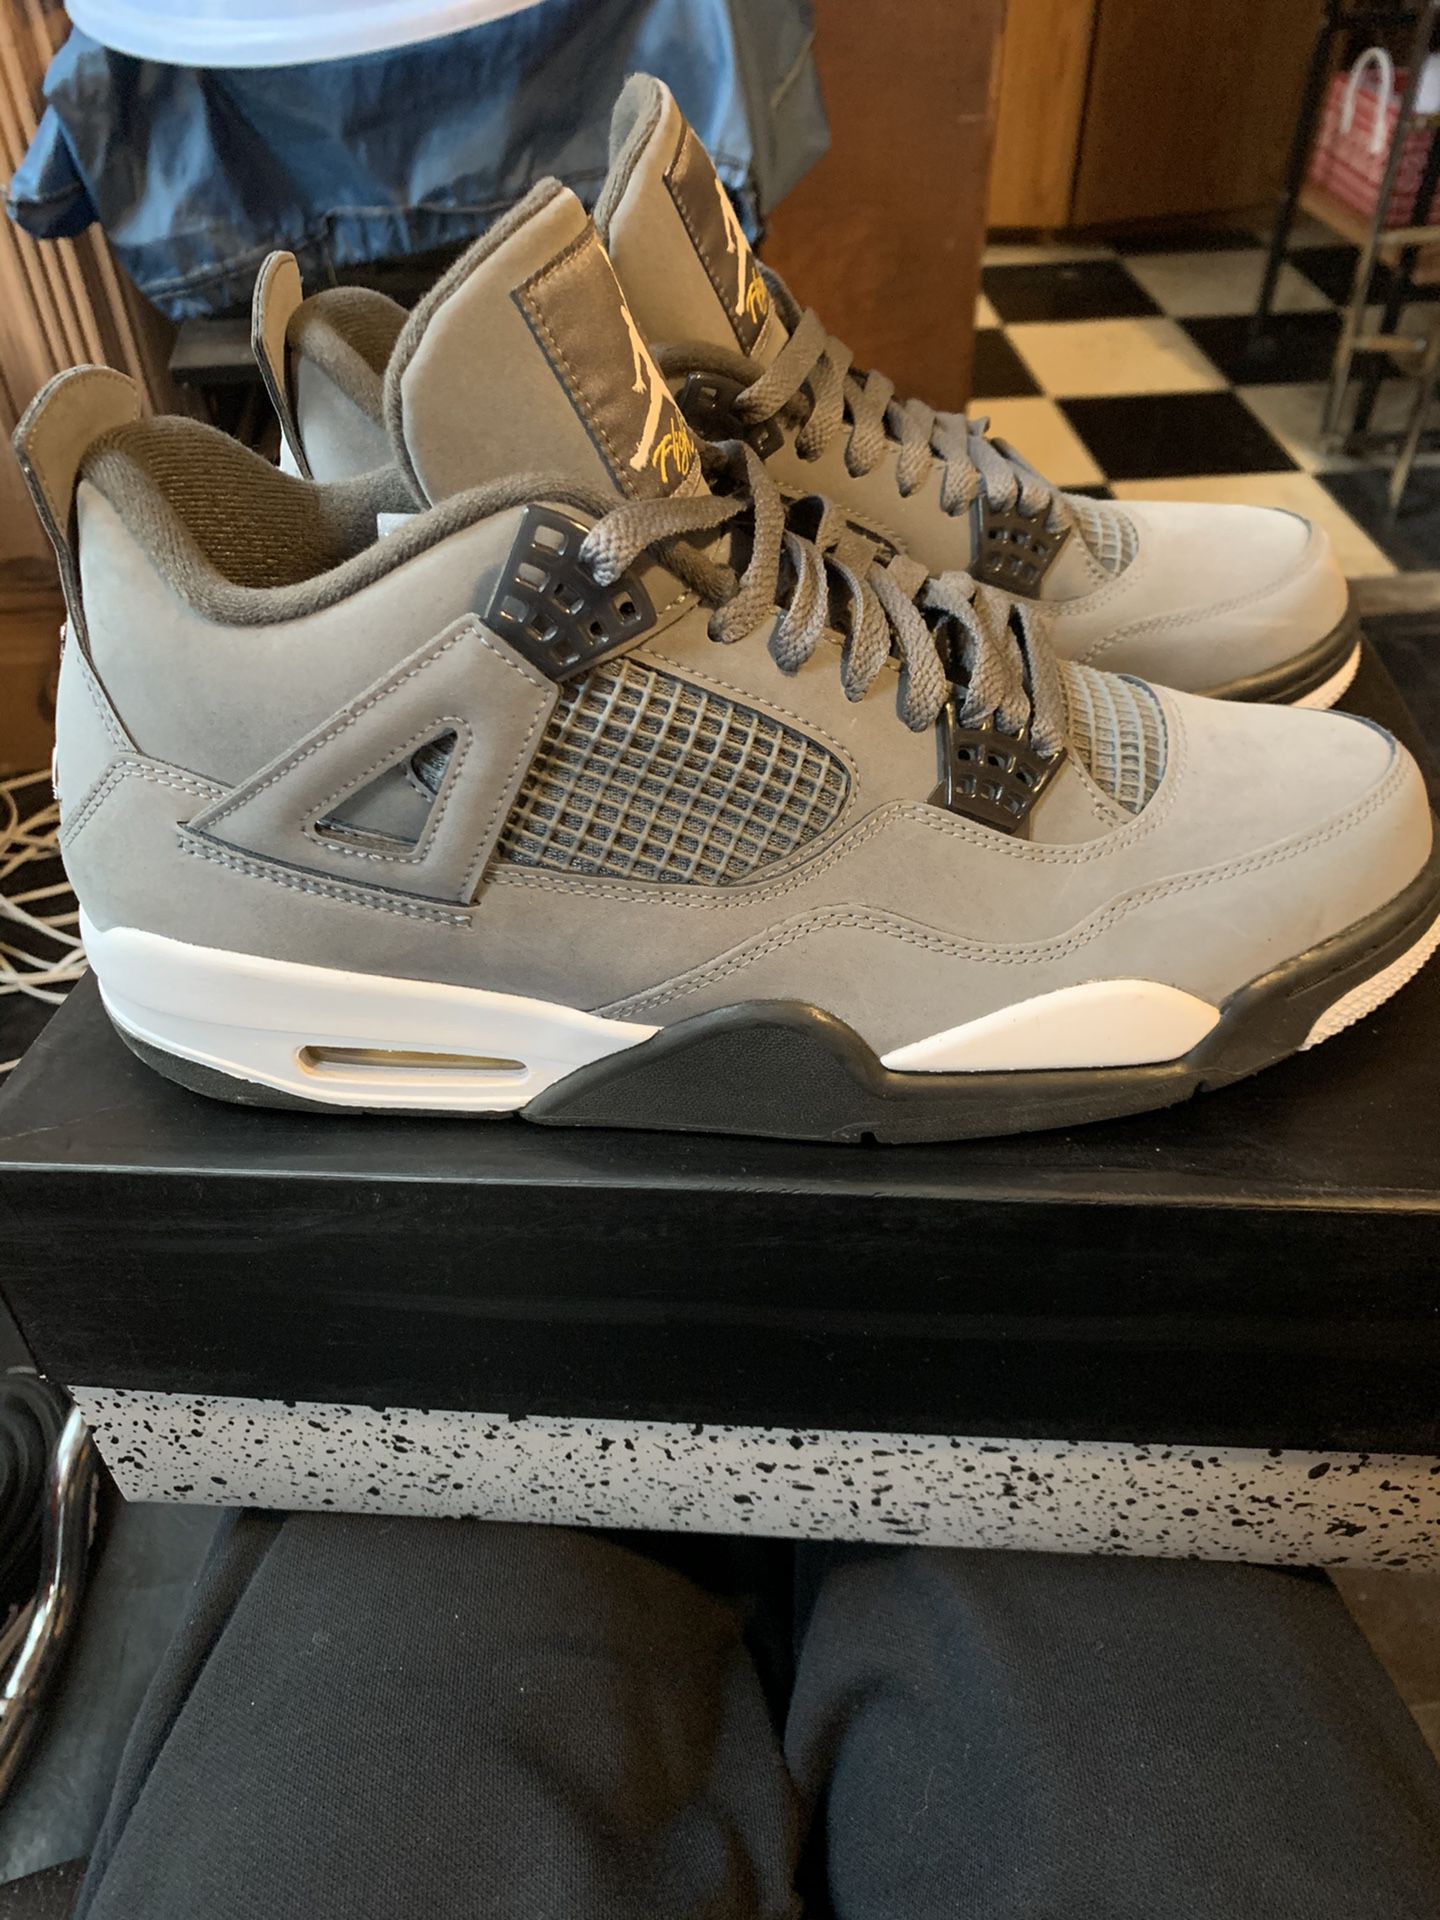 Air Jordan Cool Grey 4s Size 11.5